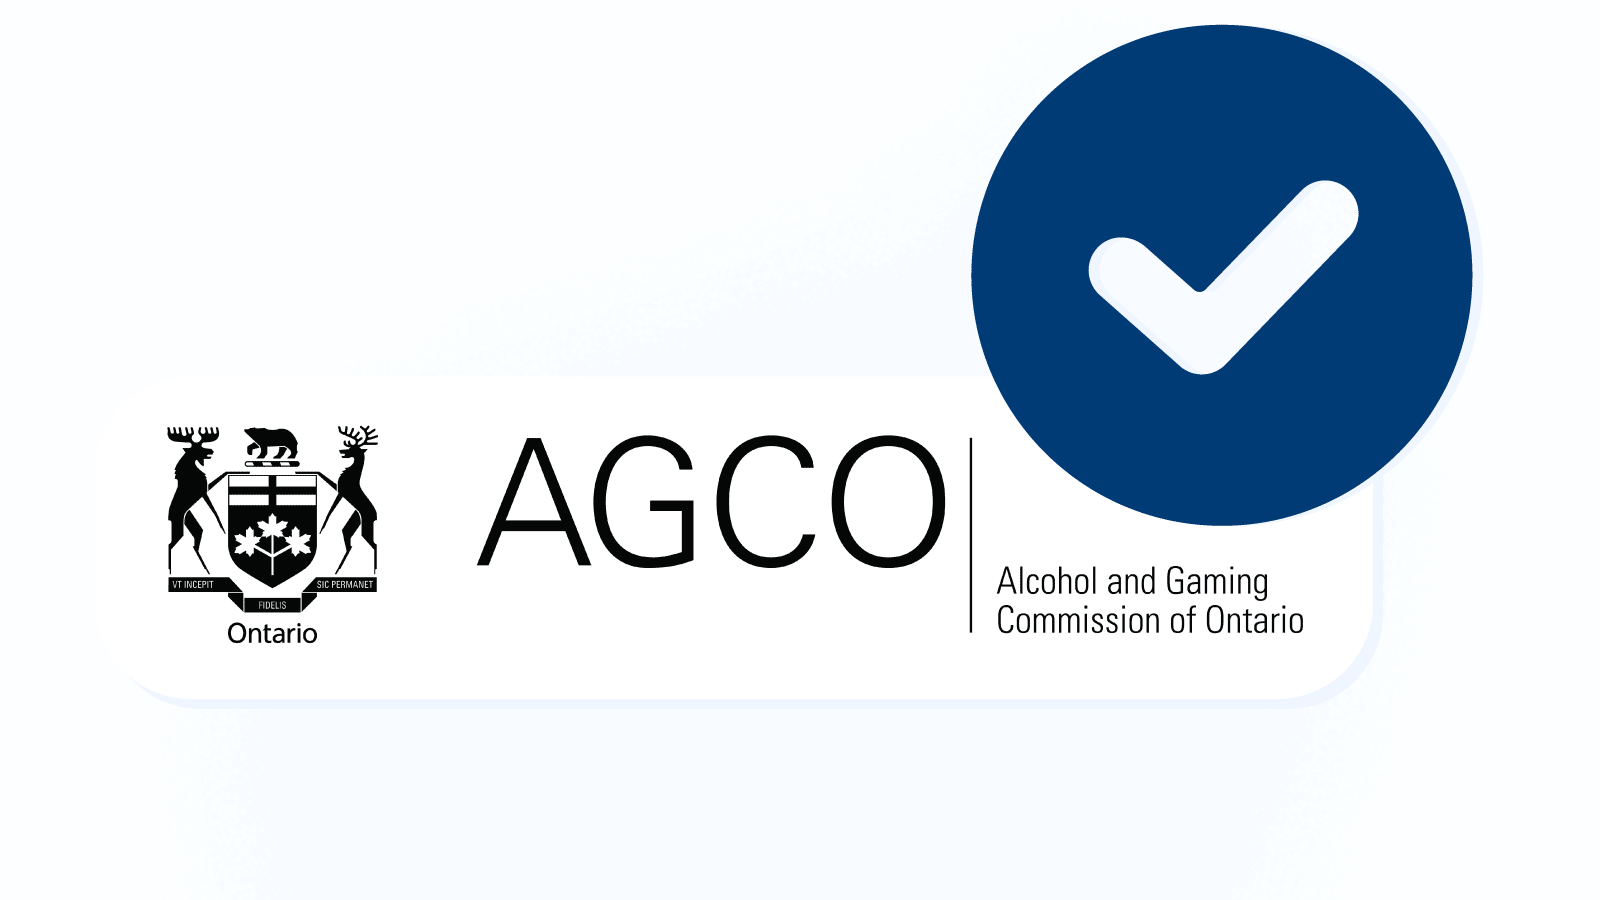 Full AGCO compliance